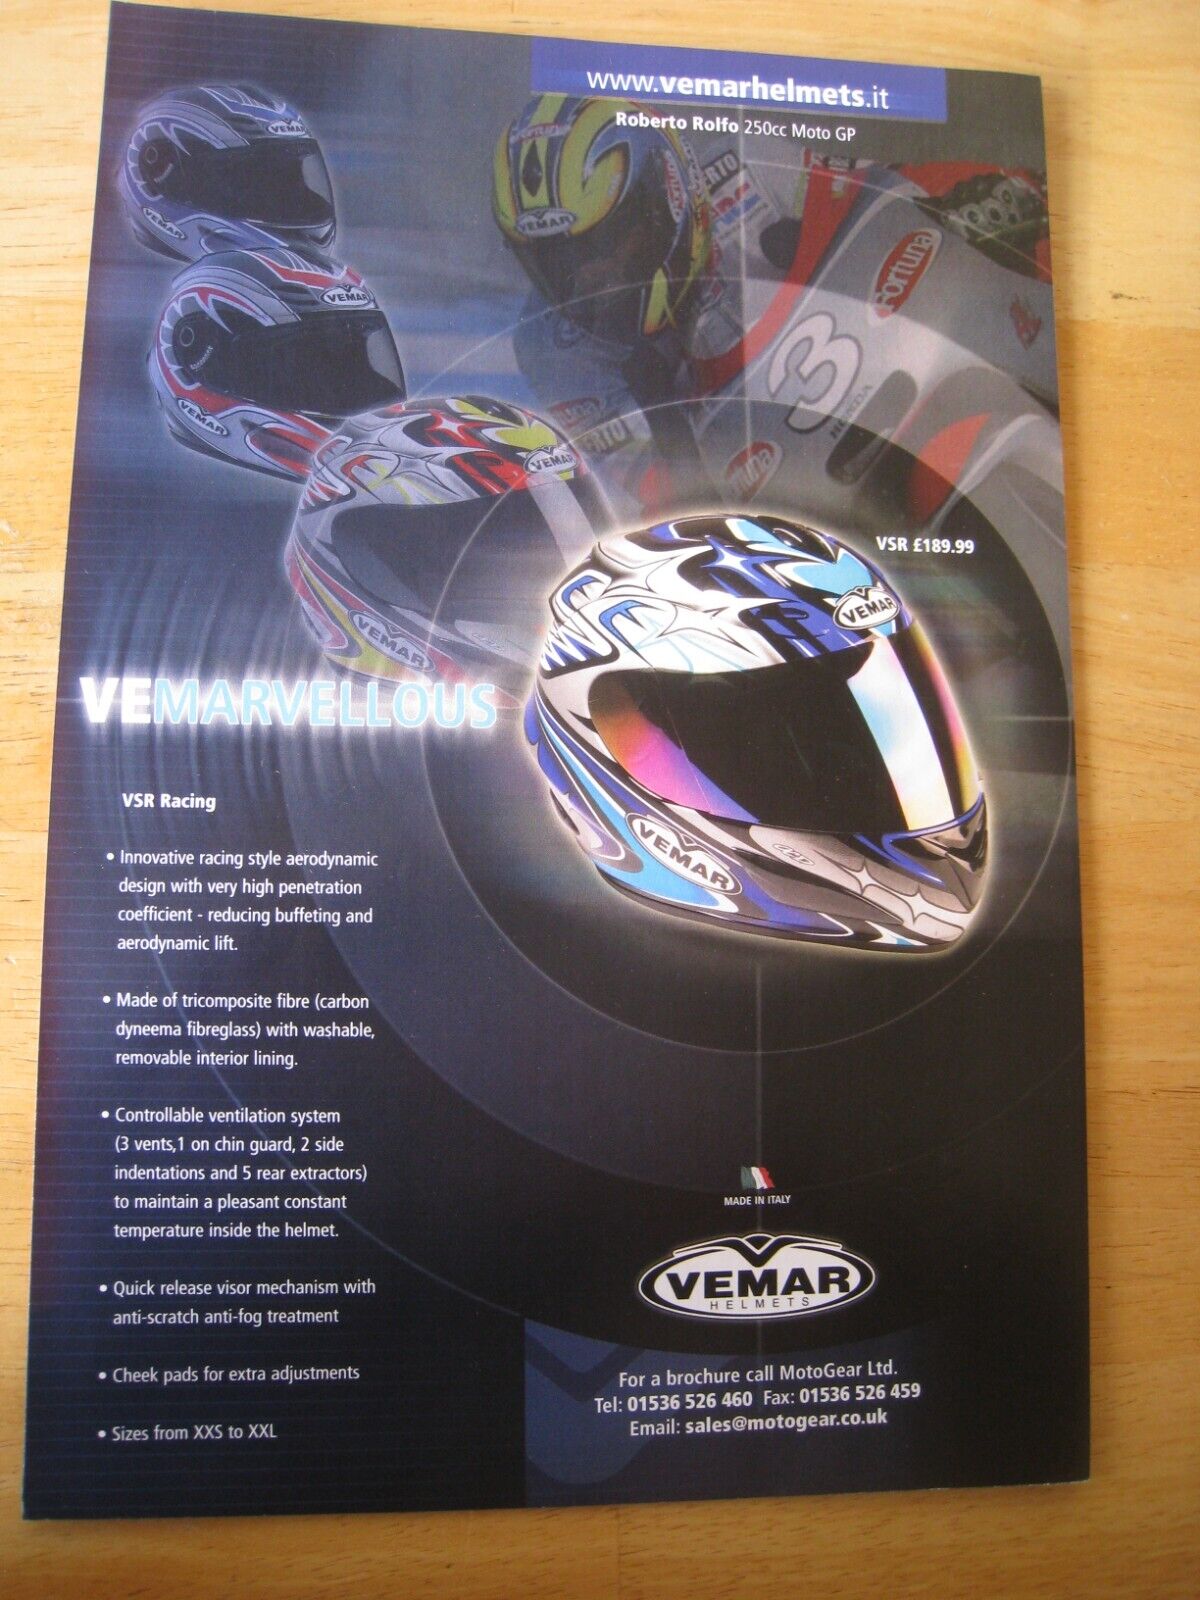 VEMAR HELMETS ROBERTO ROLFO 250cc MOTO GP HELMETS ITALY ADVERT A4 FILE 22